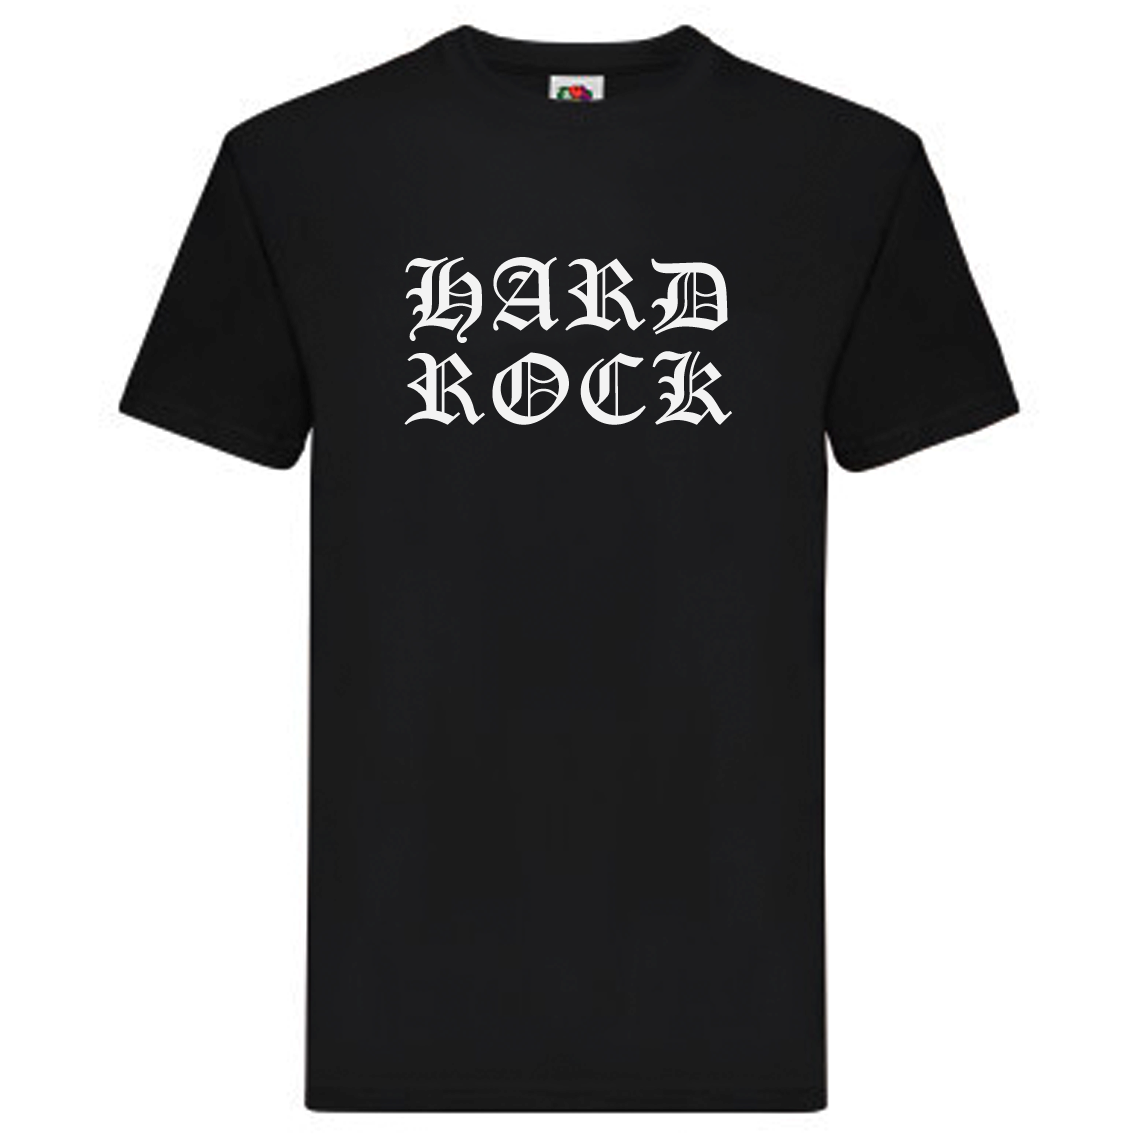 T-Shirt - Hard Rock, Old English